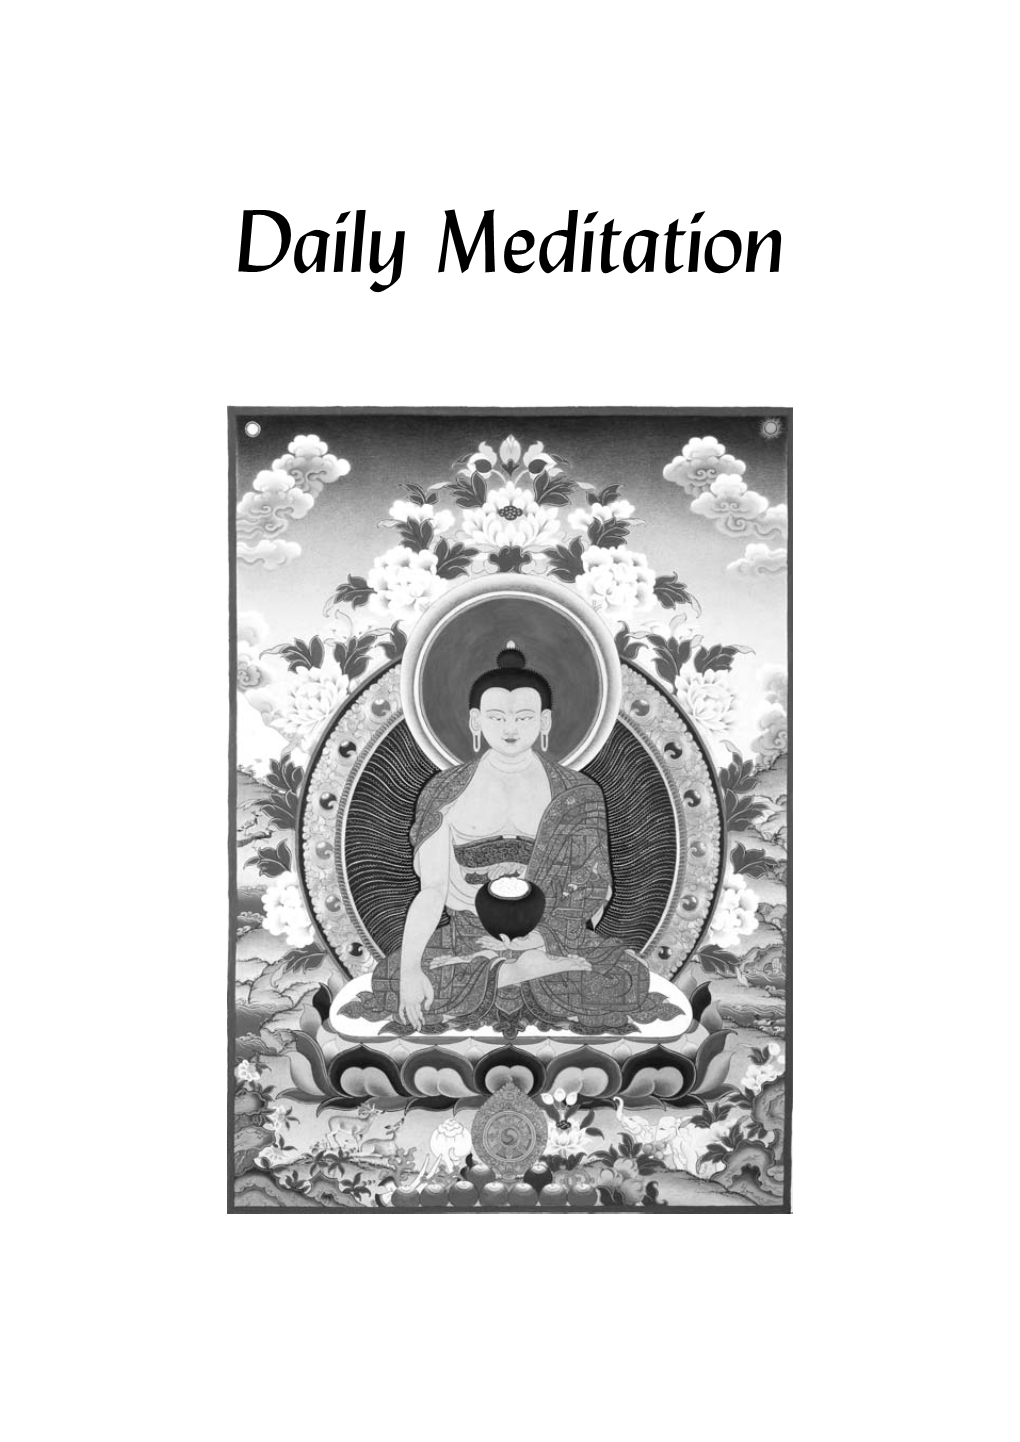 Daily Meditation Founda� on for the Preserva� on of the Mahayana Tradi� On, Inc